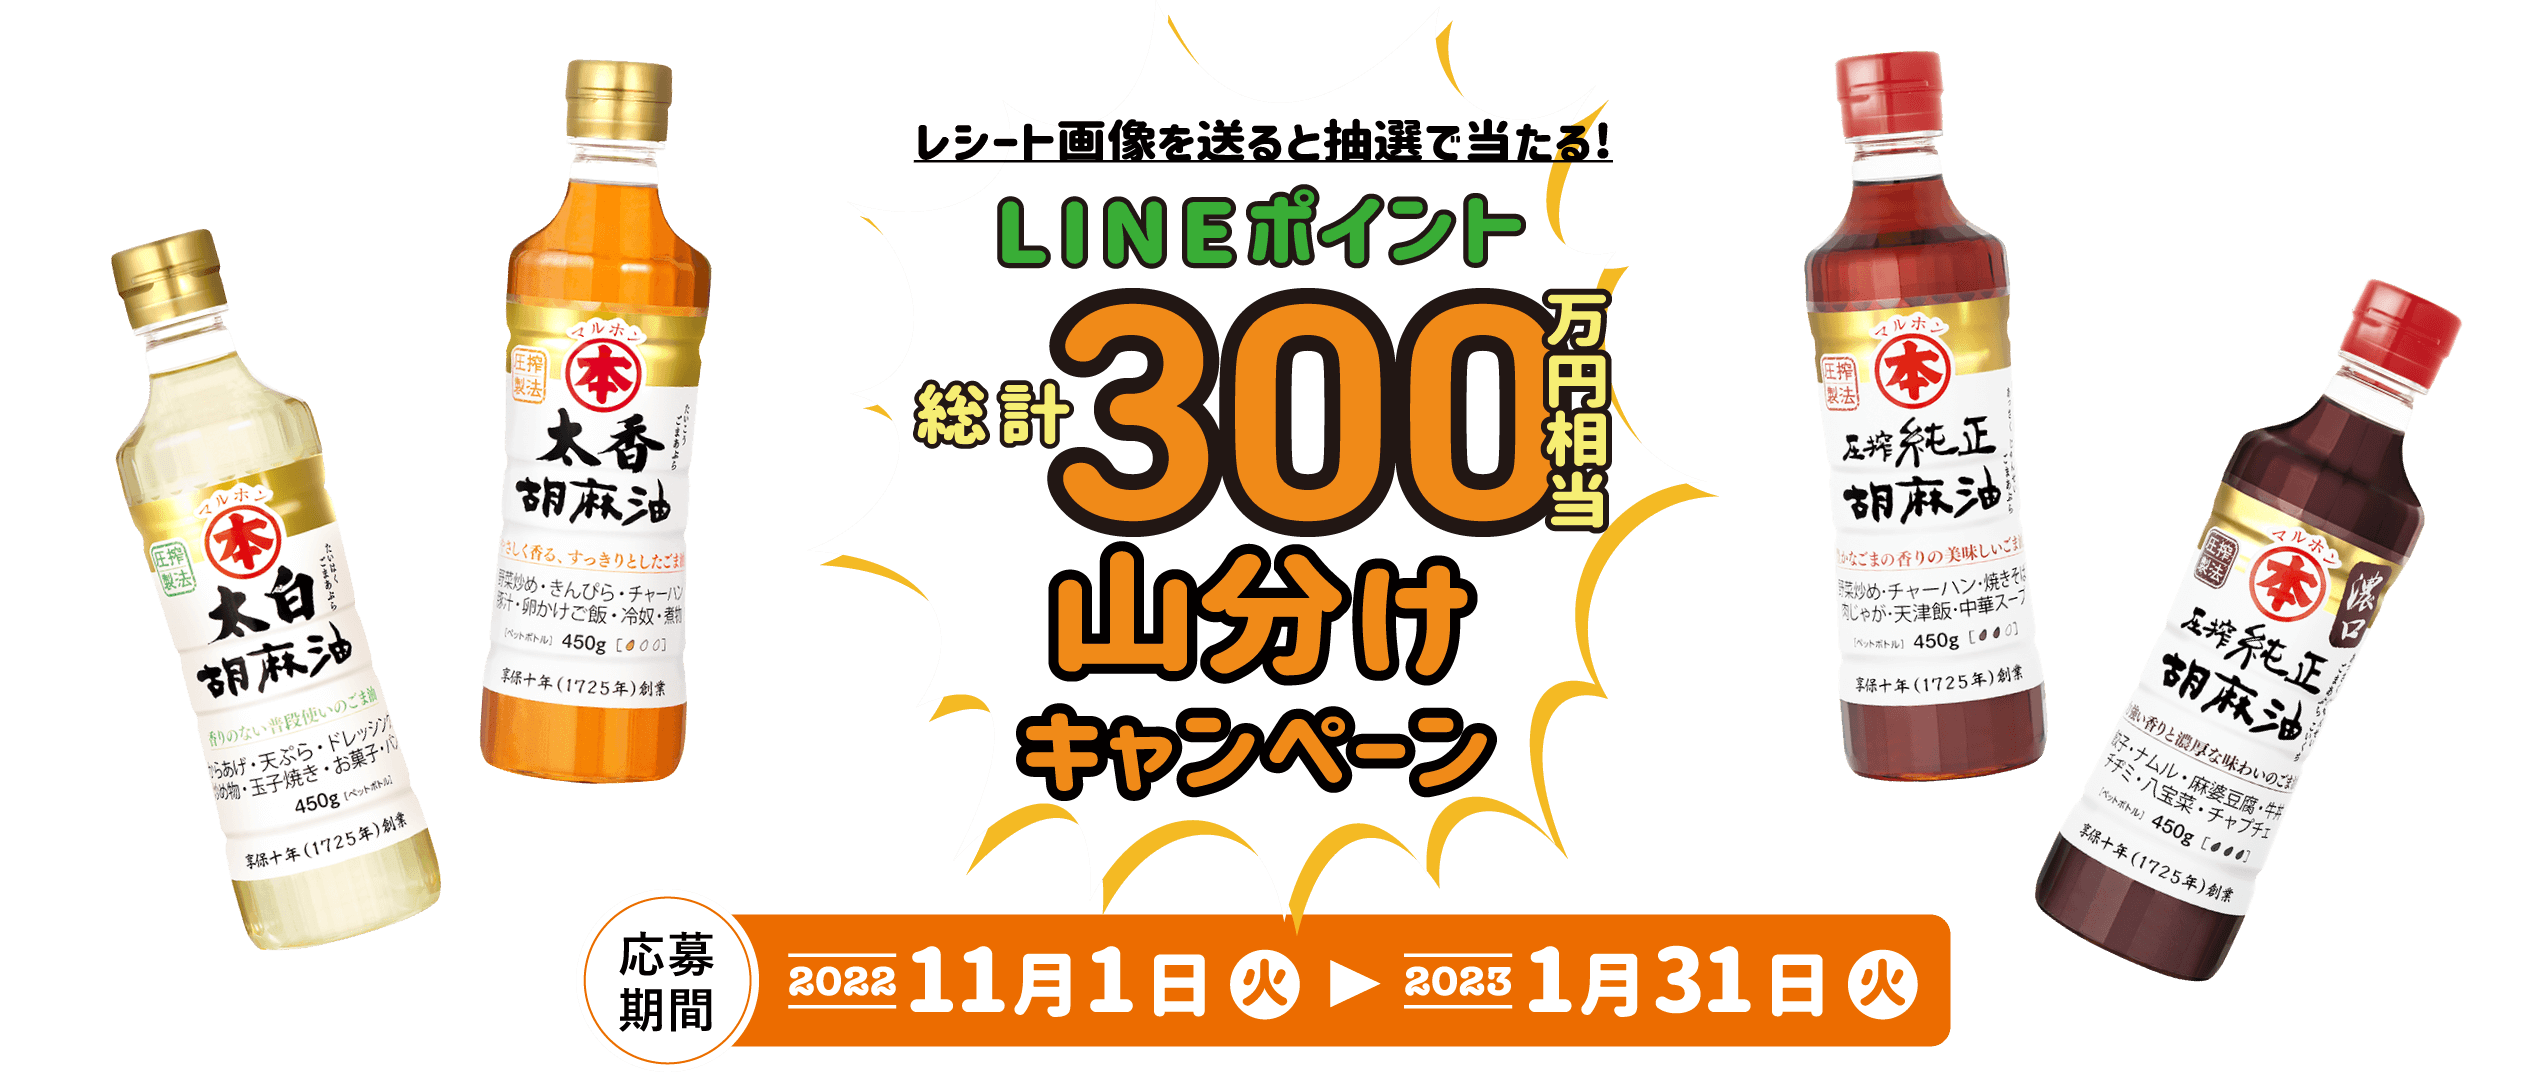 LINEポイント総計300万円相当山分けキャンペーン 応募期間2022年11月1日火曜〜2023年1月31日火曜